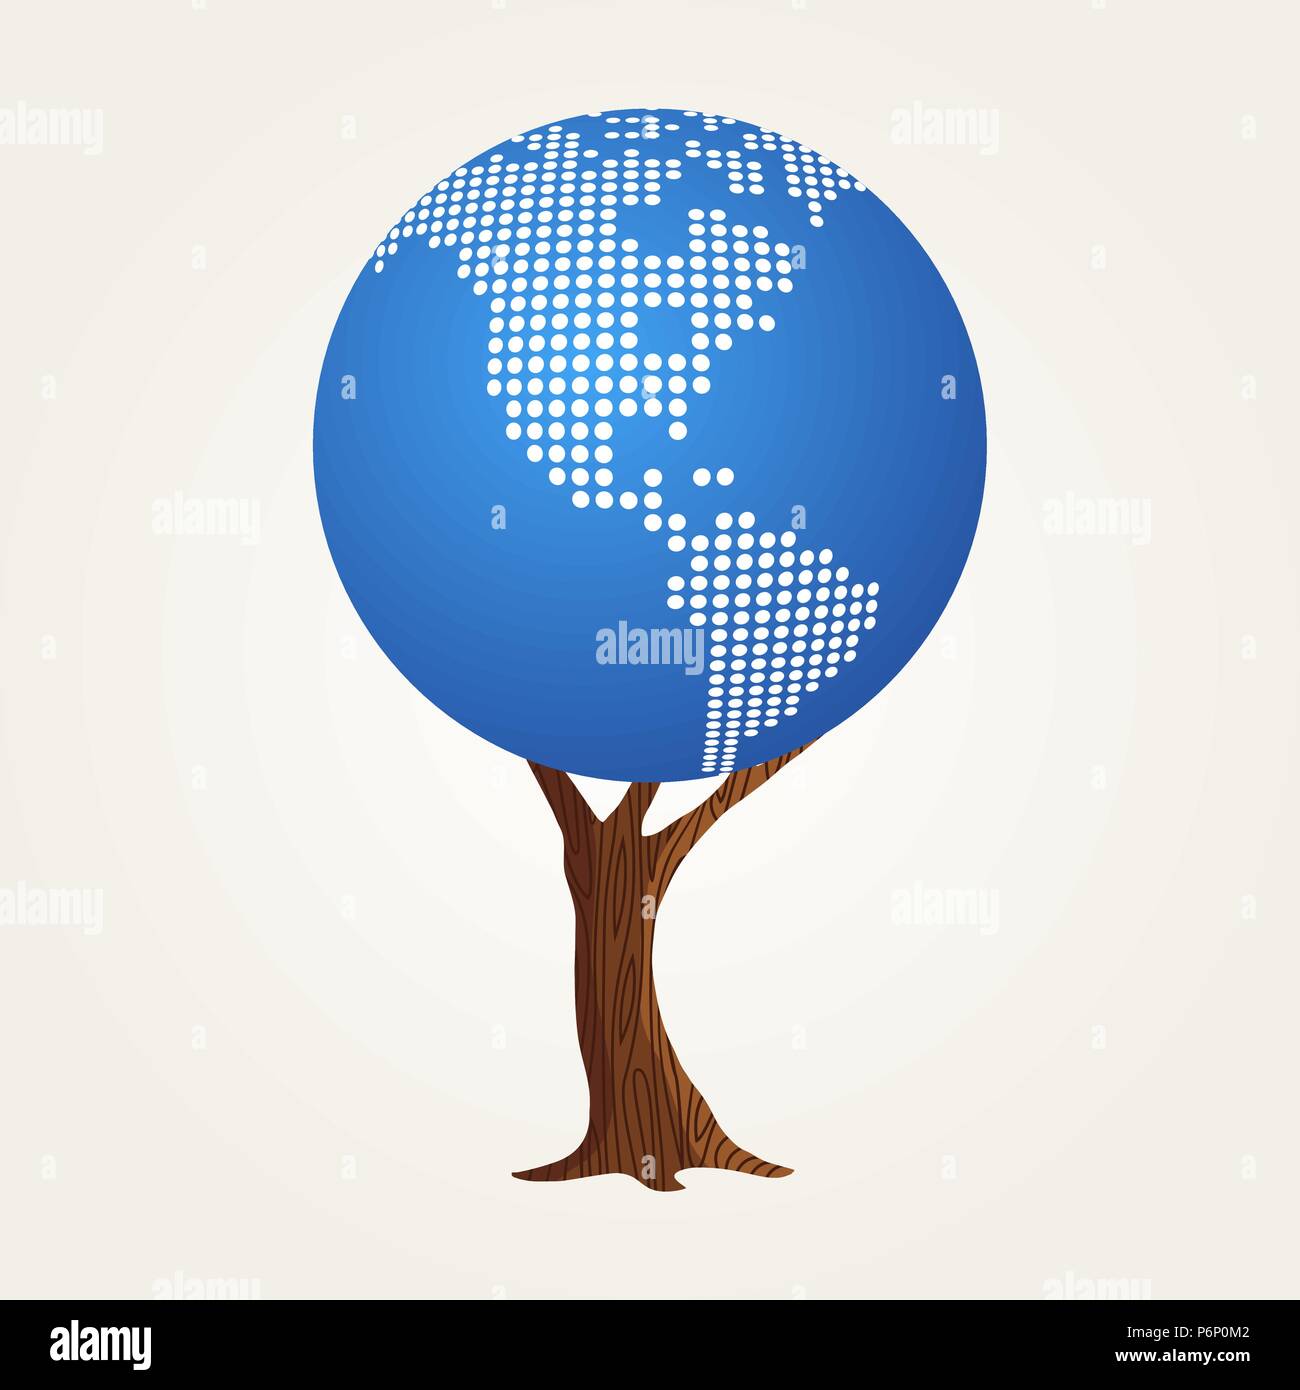 Baum aus Nordamerika Weltkarte. Konzept Abbildung über globale Kommunikation, Internet Projekt oder weltweit. EPS 10 Vektor. Stock Vektor